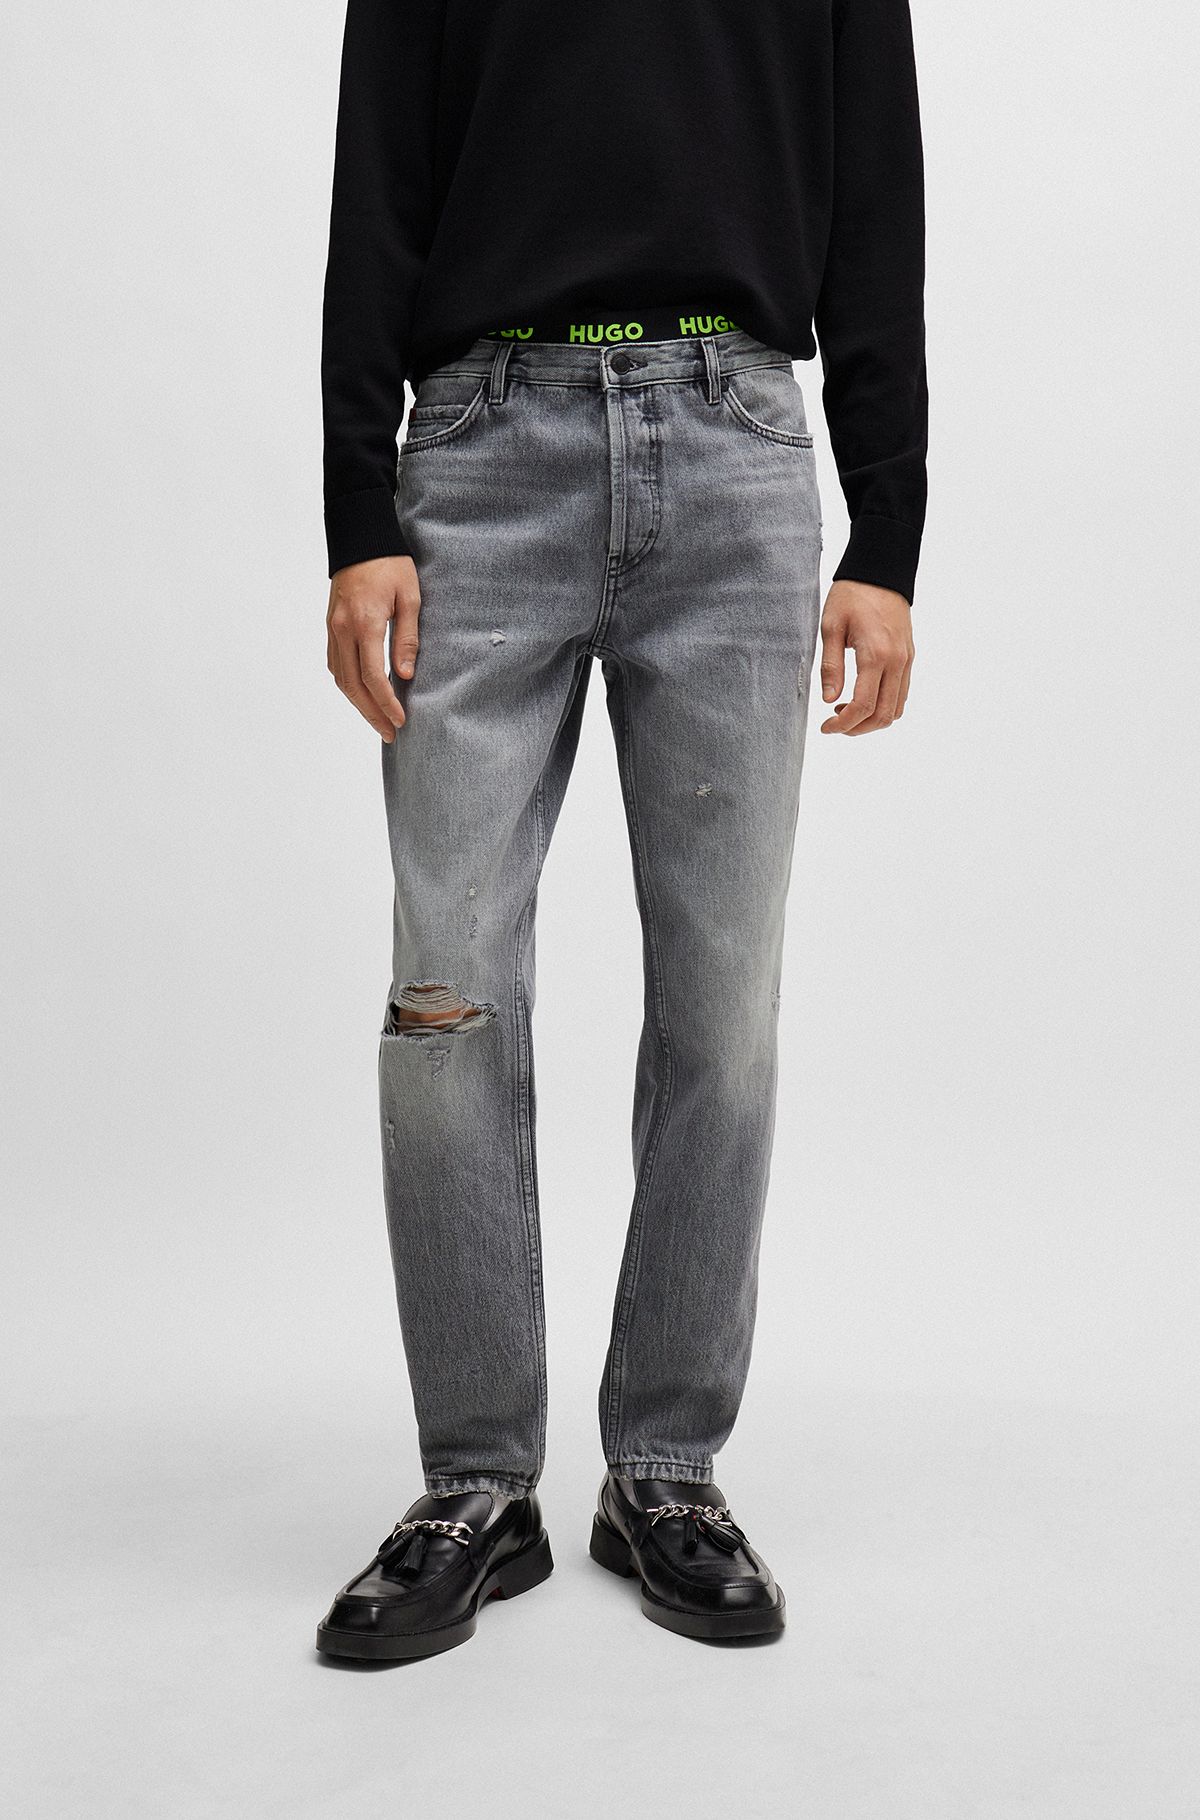 Buy Gray Pants For Men | Shop Now